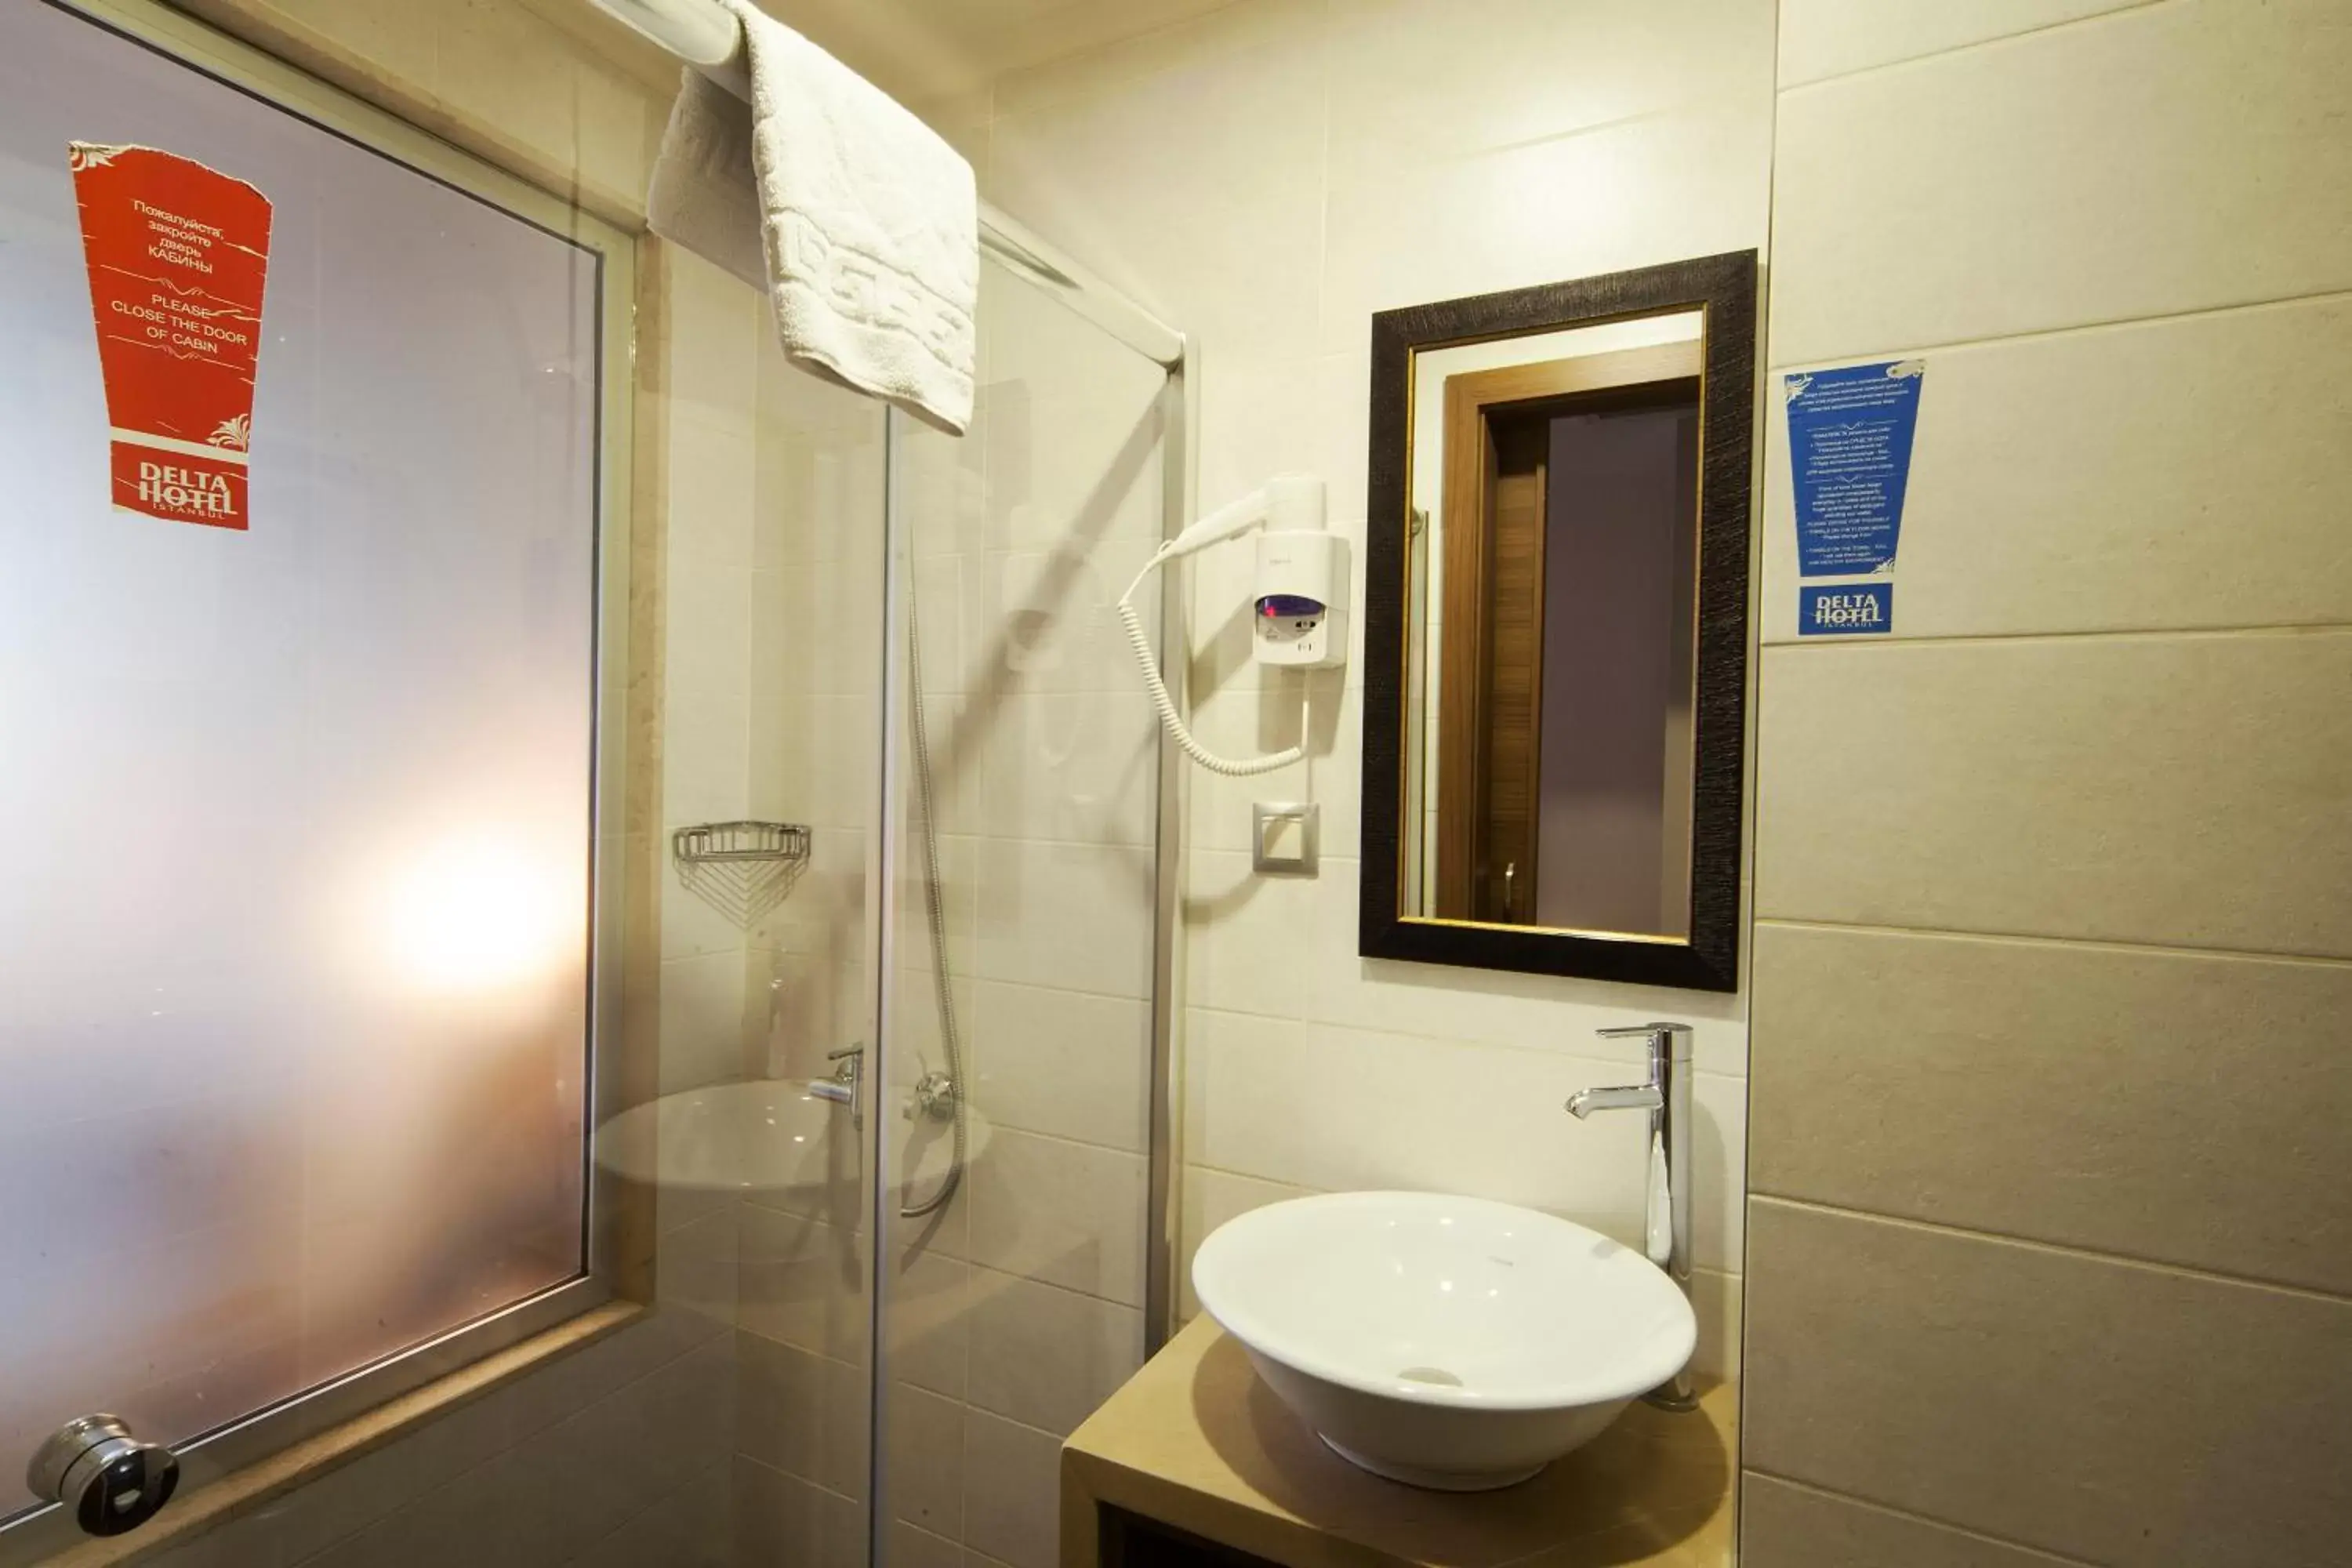 Decorative detail, Bathroom in Delta Hotel Istanbul